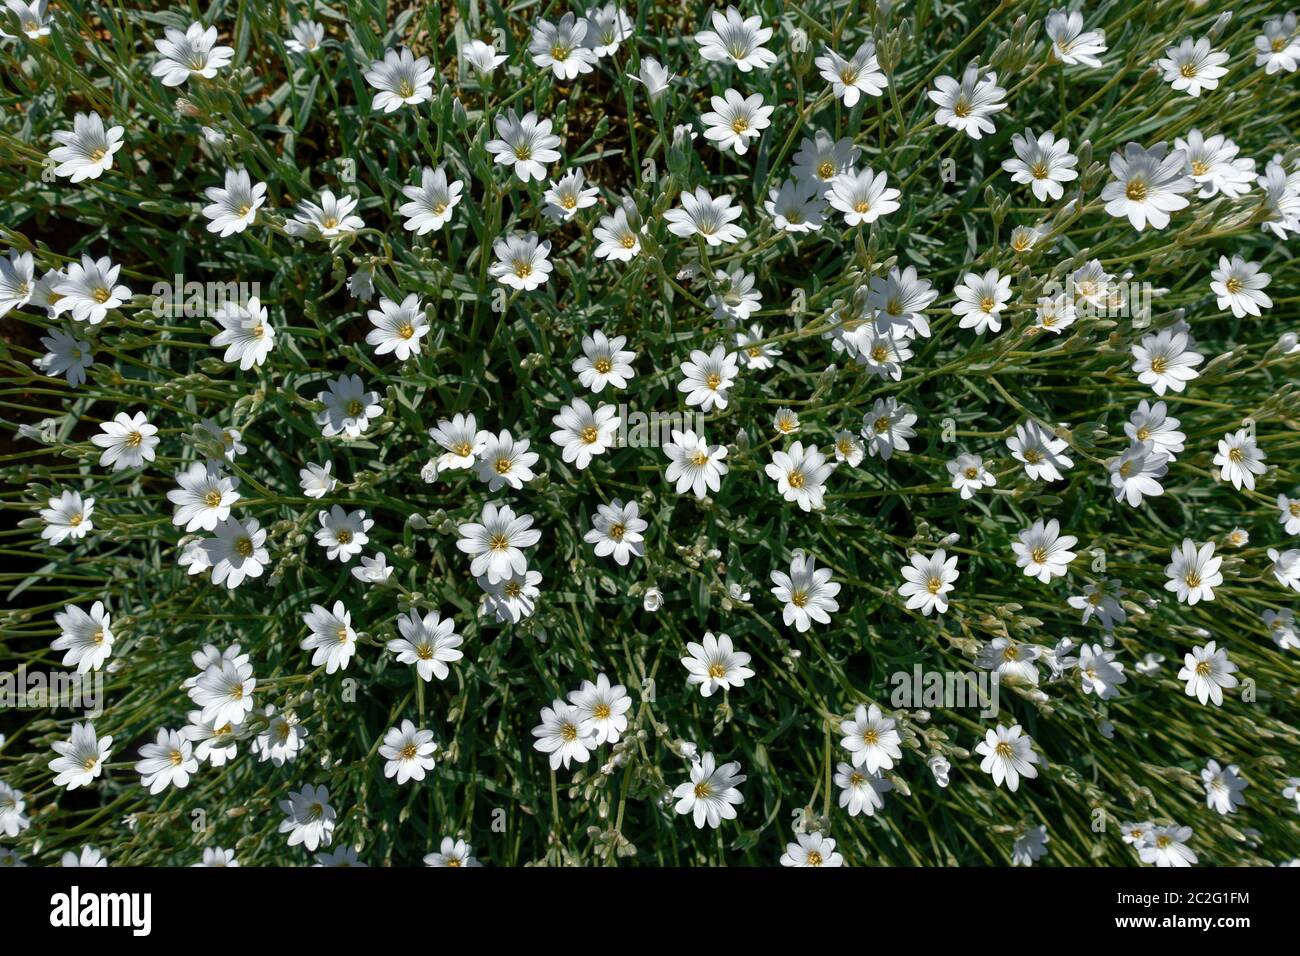 Rock garden plant Snow-in-summer - Cerastium tomentosum - with numerous white flowers Stock Photo